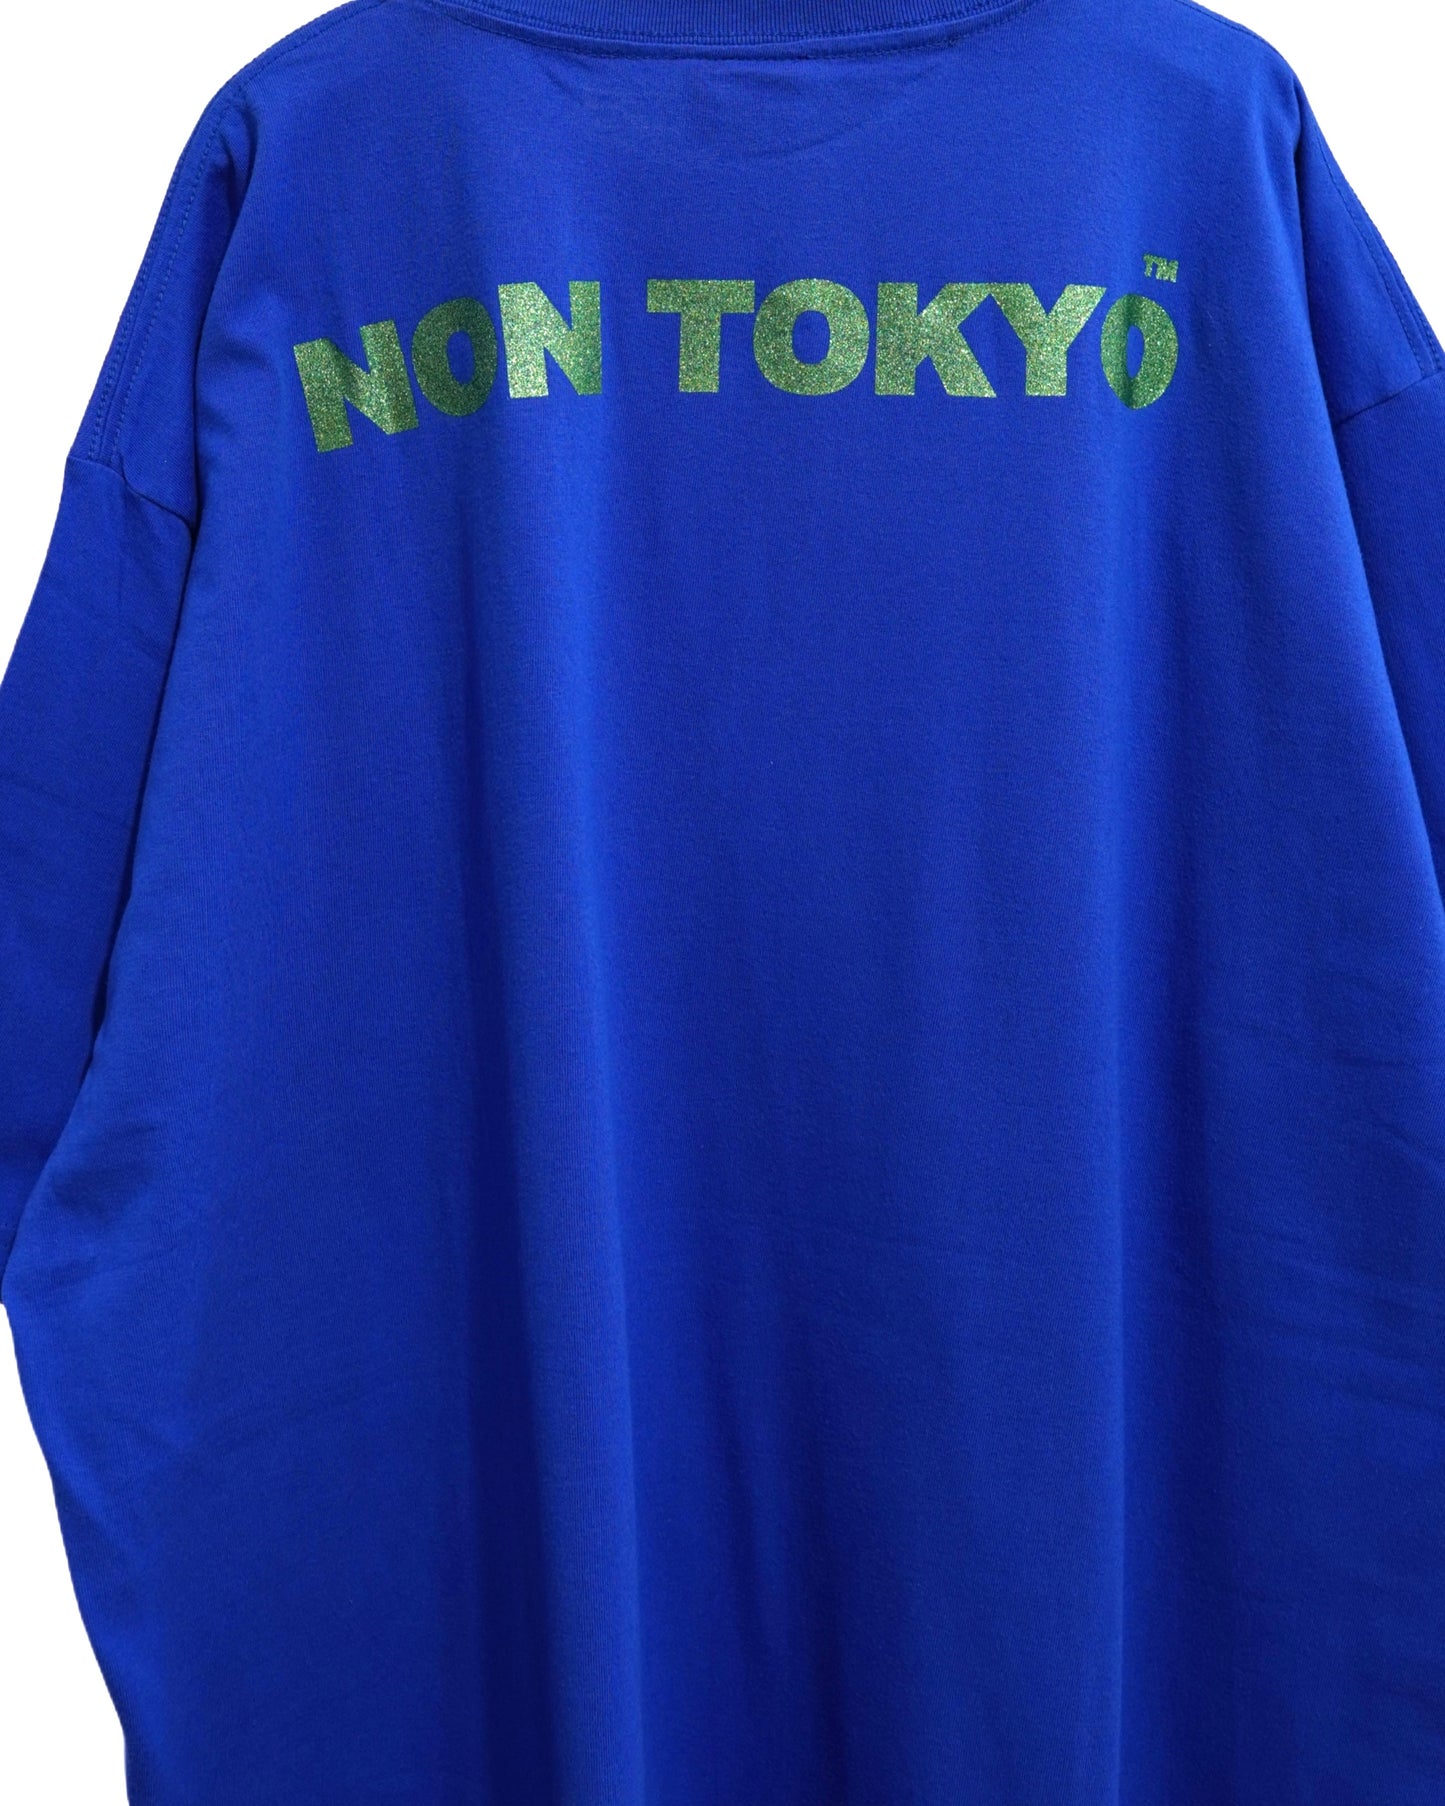 NON TOKYO /  PRINT BIG T-SHIRT (FACE / BLUE) / 〈ノントーキョー〉プリントビッグTシャツ (フェイス / ブルー)